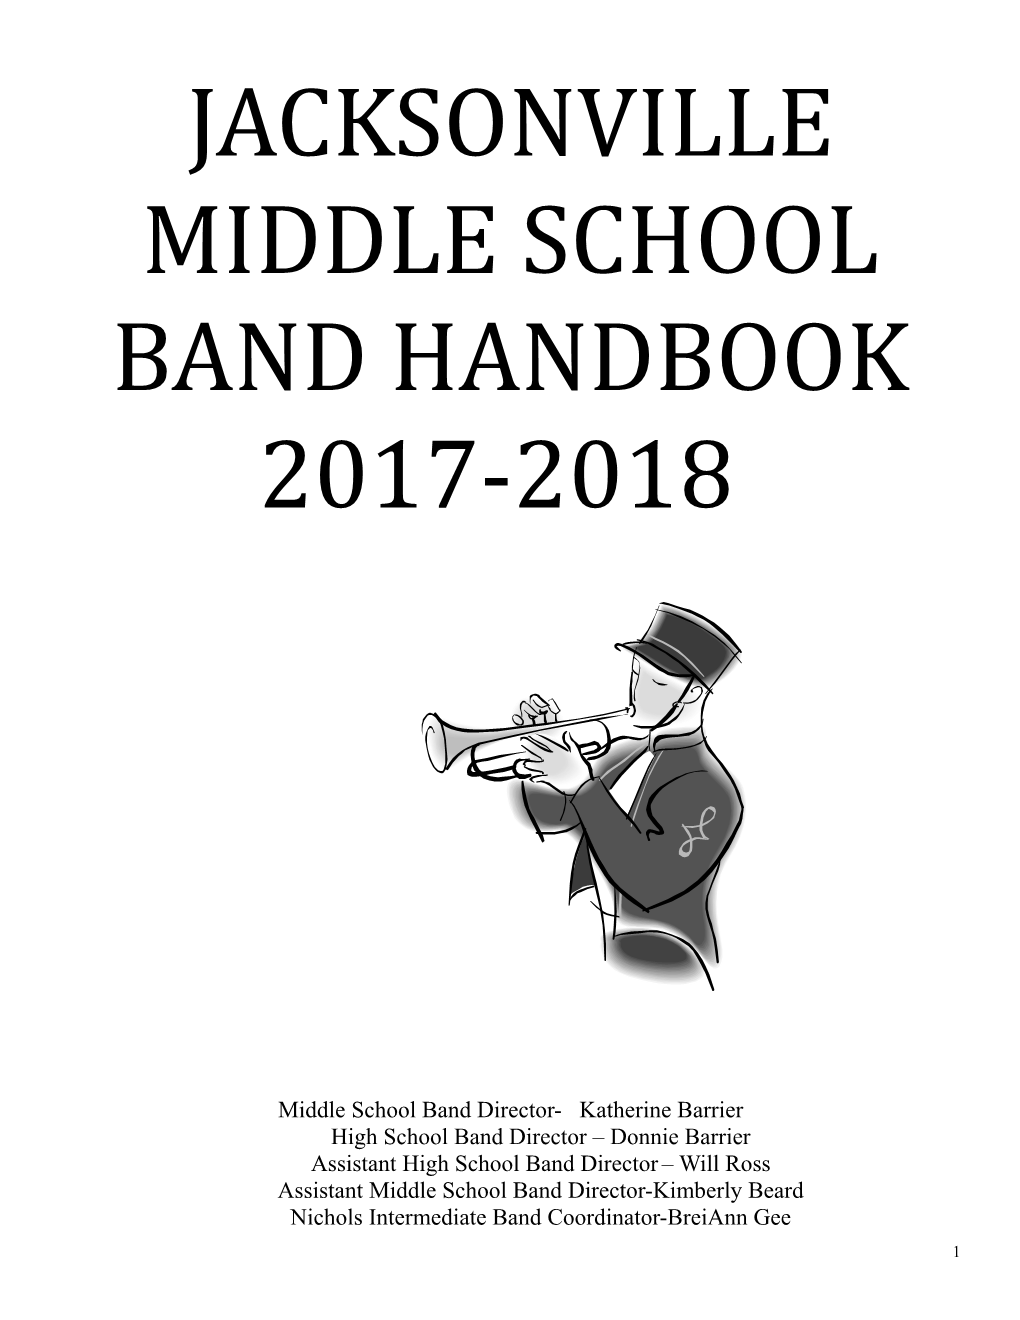 Middle School Band Director- Katherine Barrier